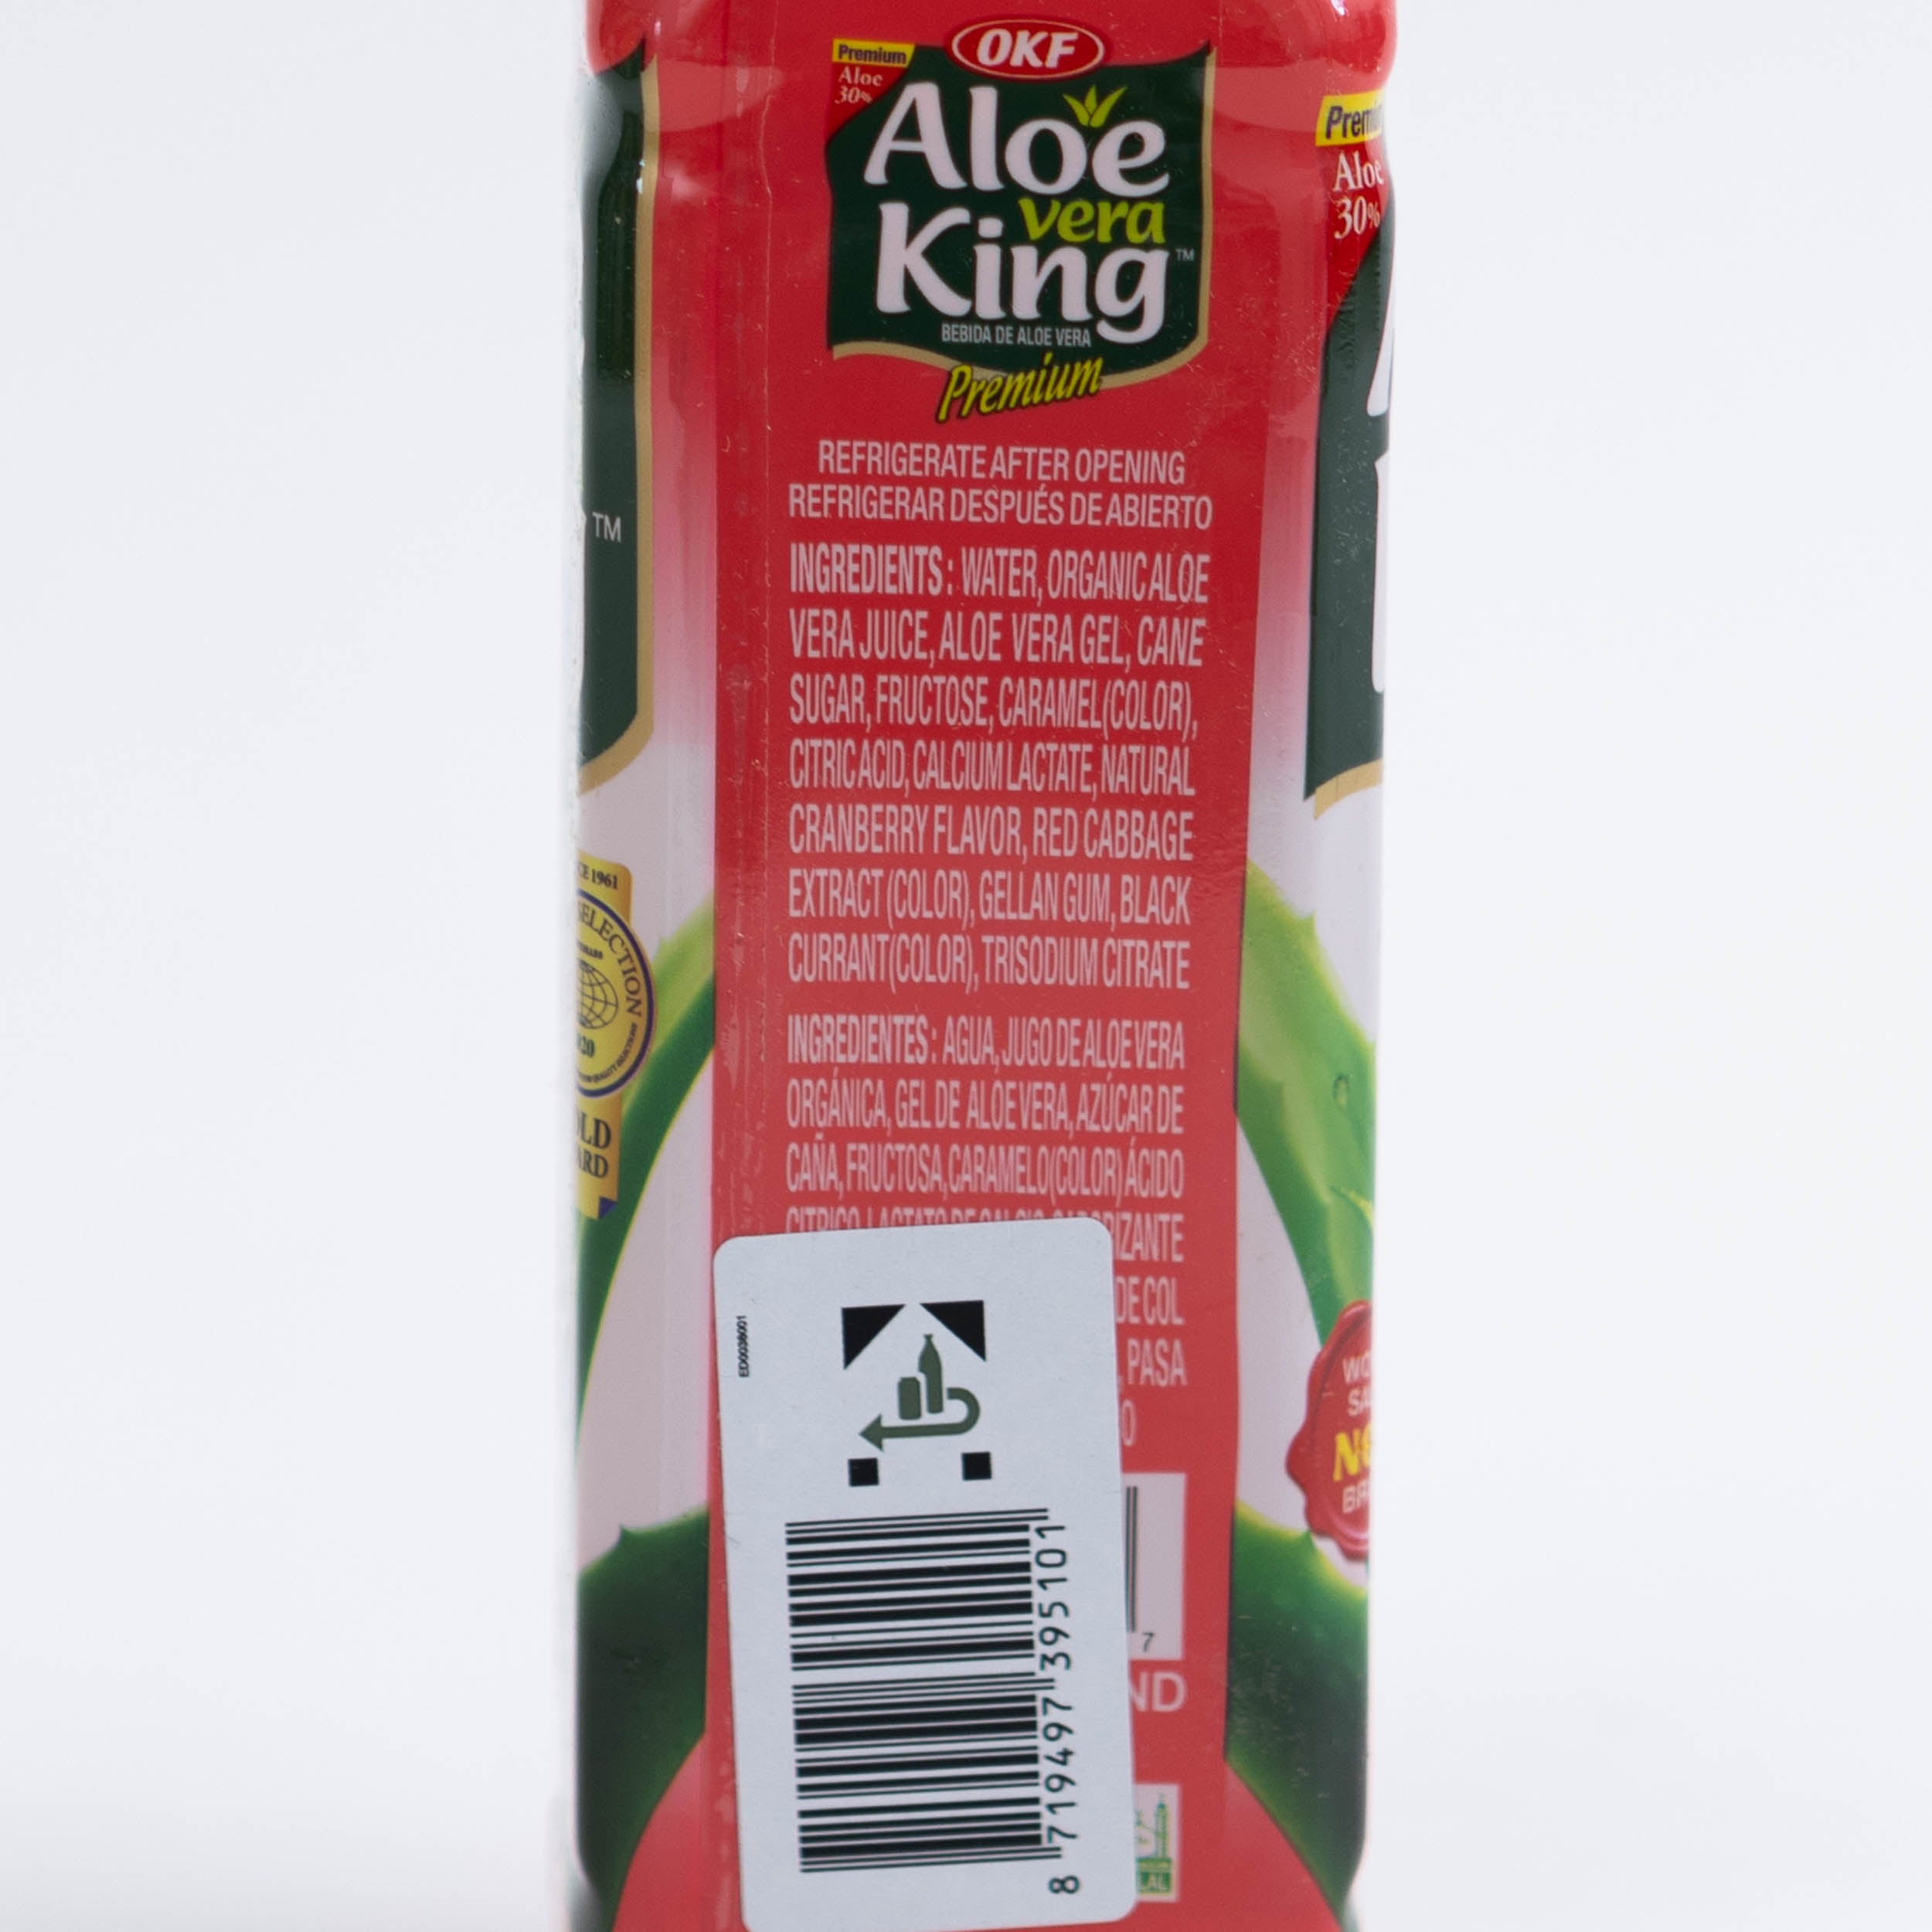 zutaten dinese.de aloe vera king asia shop onlineshop online asiatische getränke drink cranberry